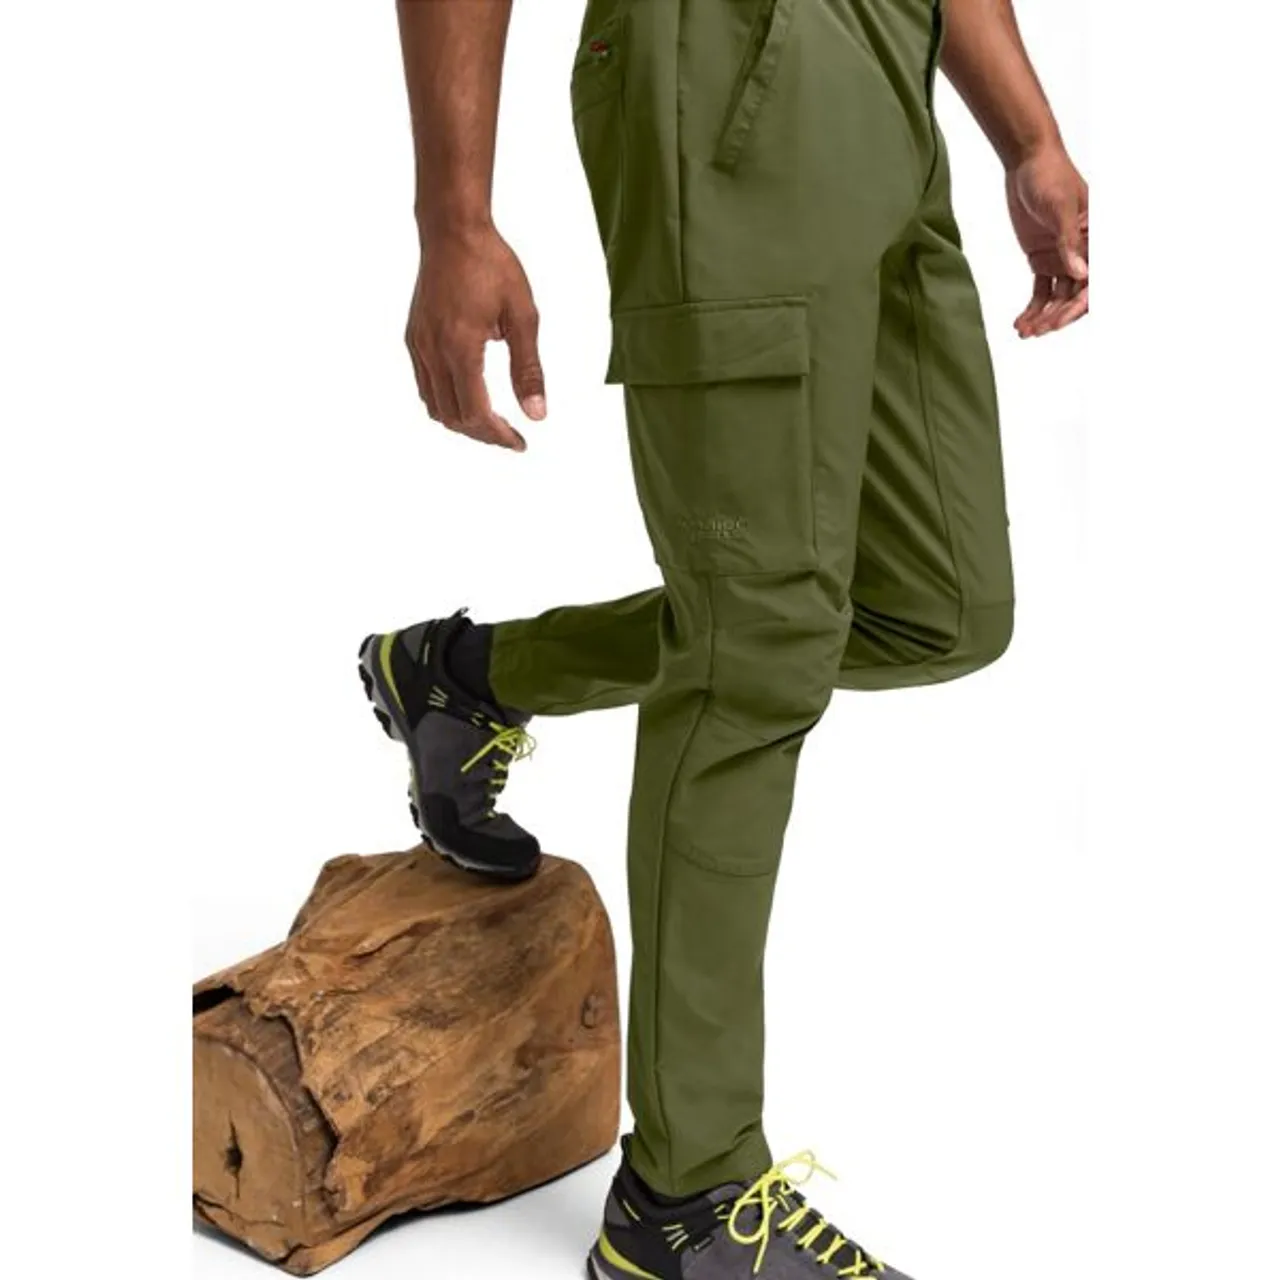 Cargohose MAIER SPORTS "Fenit M" Gr. 24, Kurzgrößen, grün (moosgrün) Herren Hosen Sporthosen Outdoorhose, ideale Wanderhose oder Trekkinghose